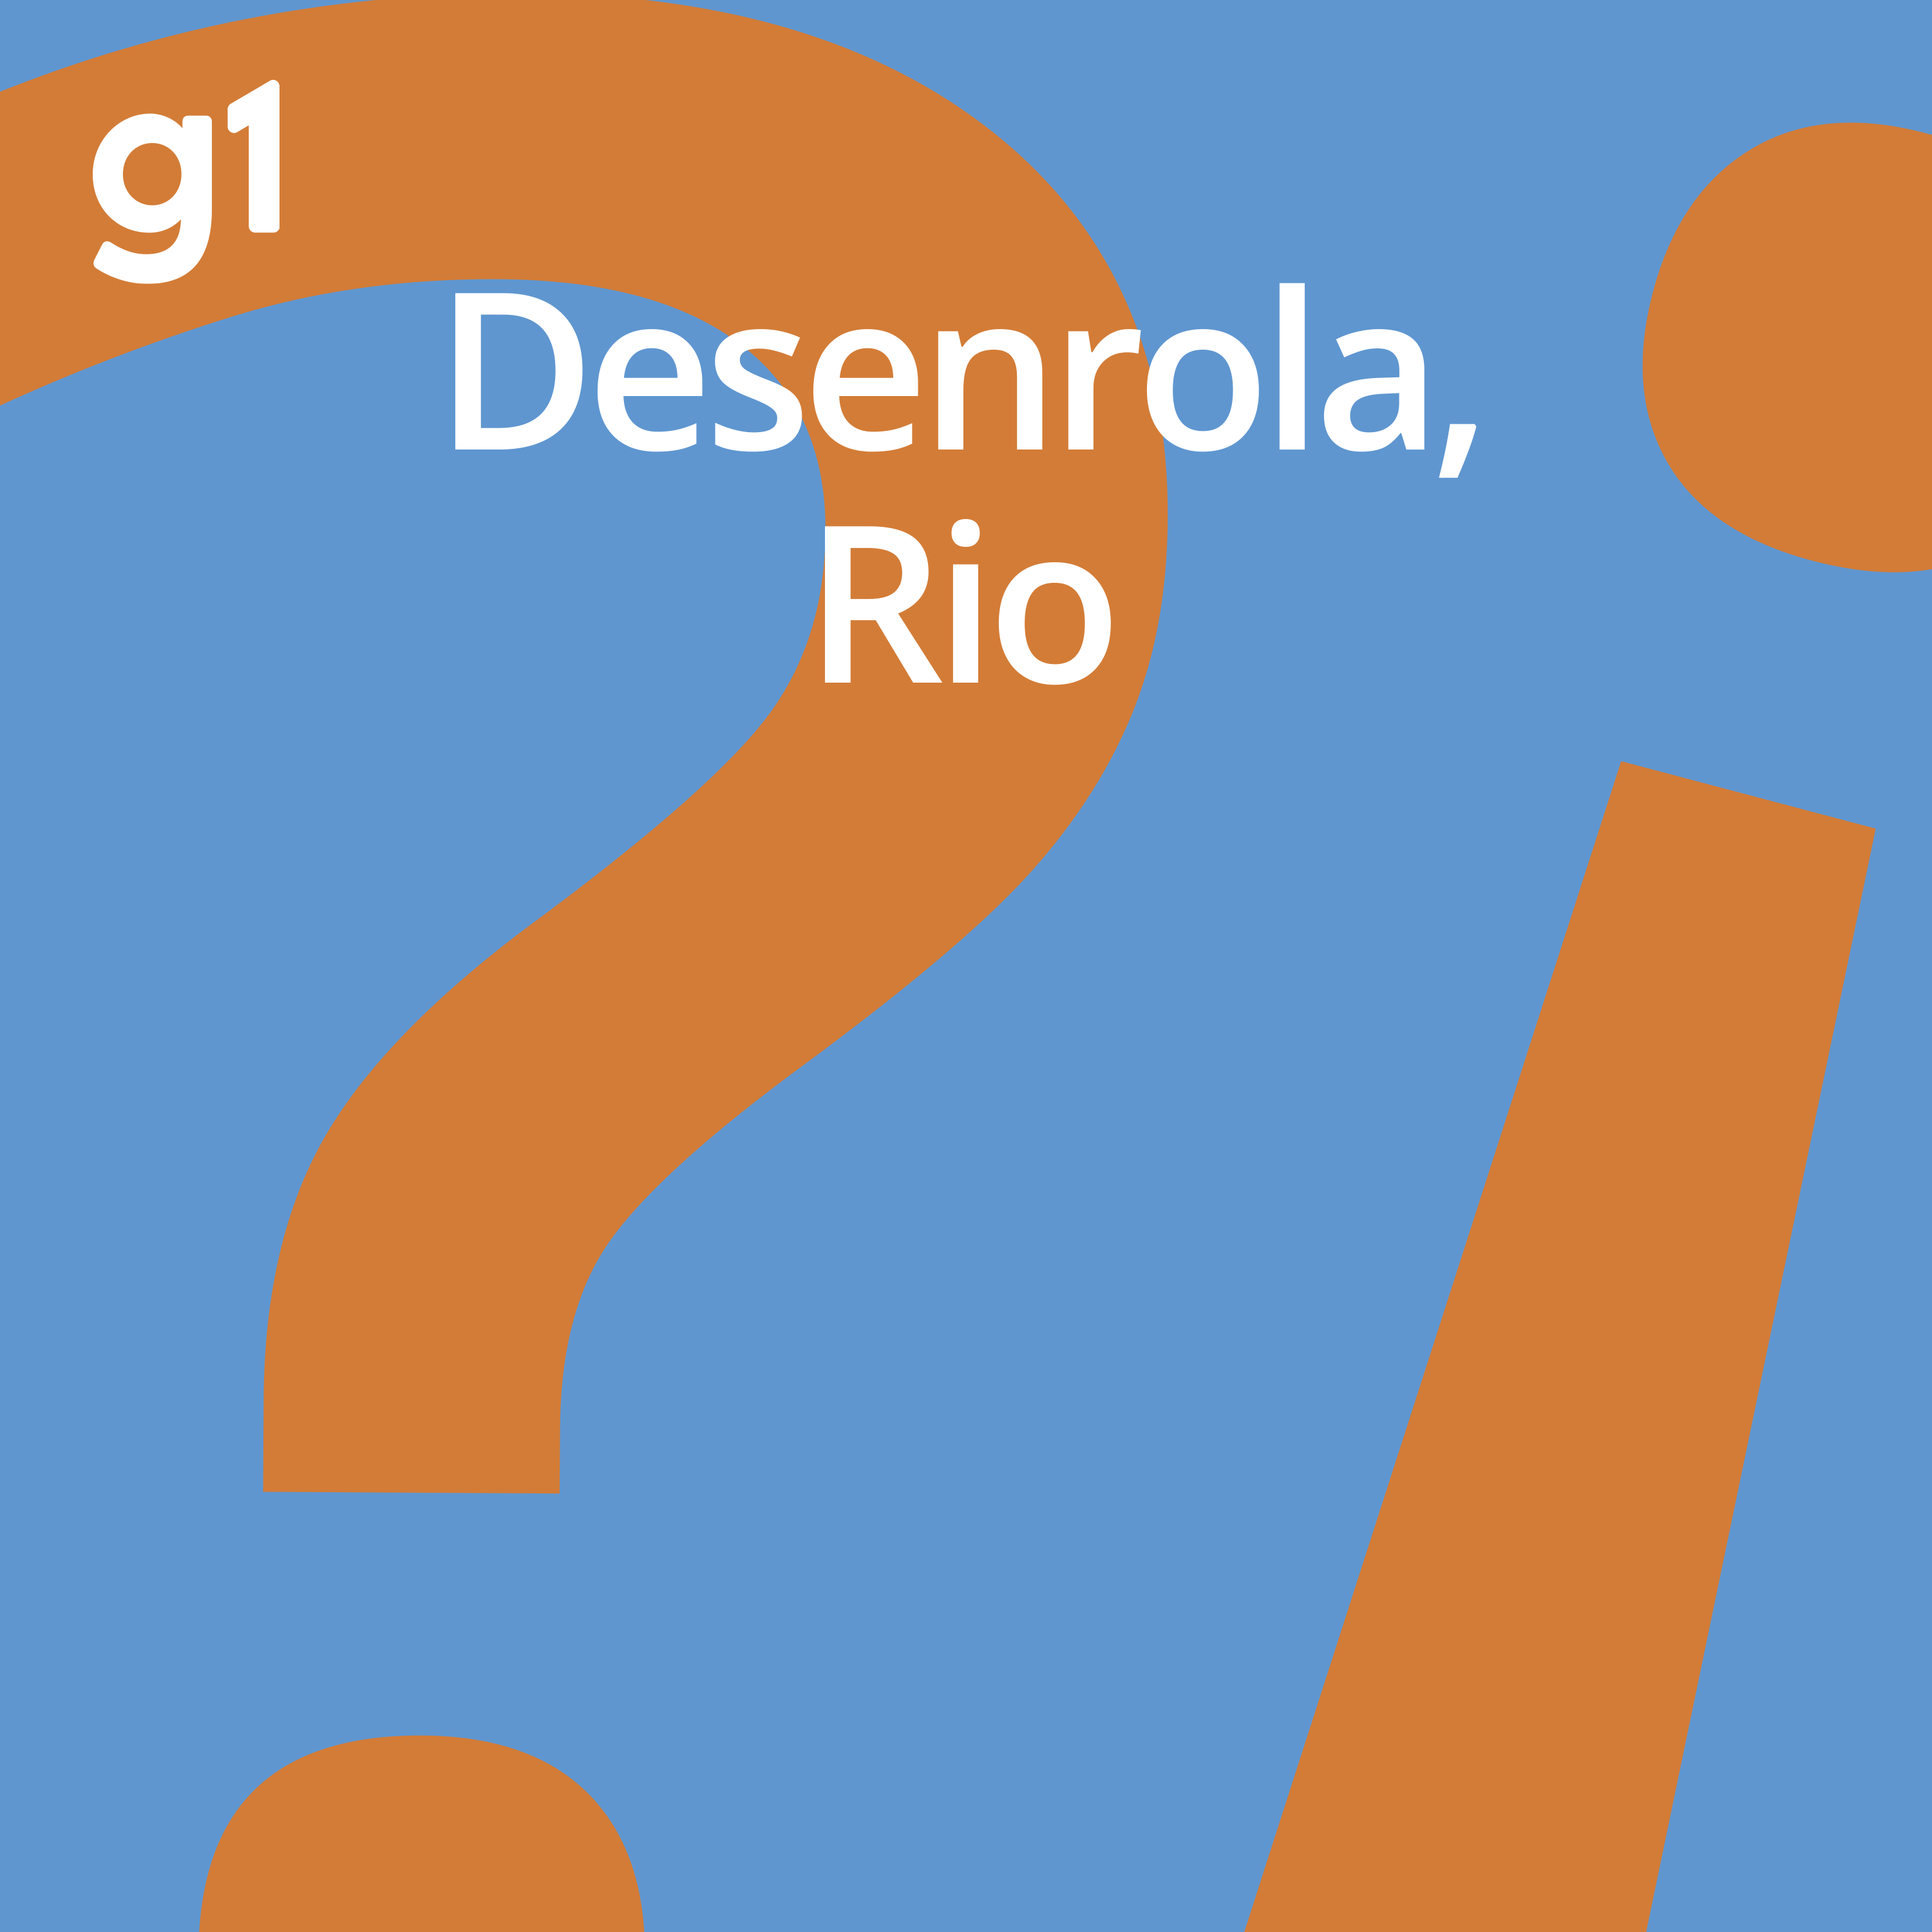 #125 Desenrola, Rio - Procedimentos estéticos clandestinos